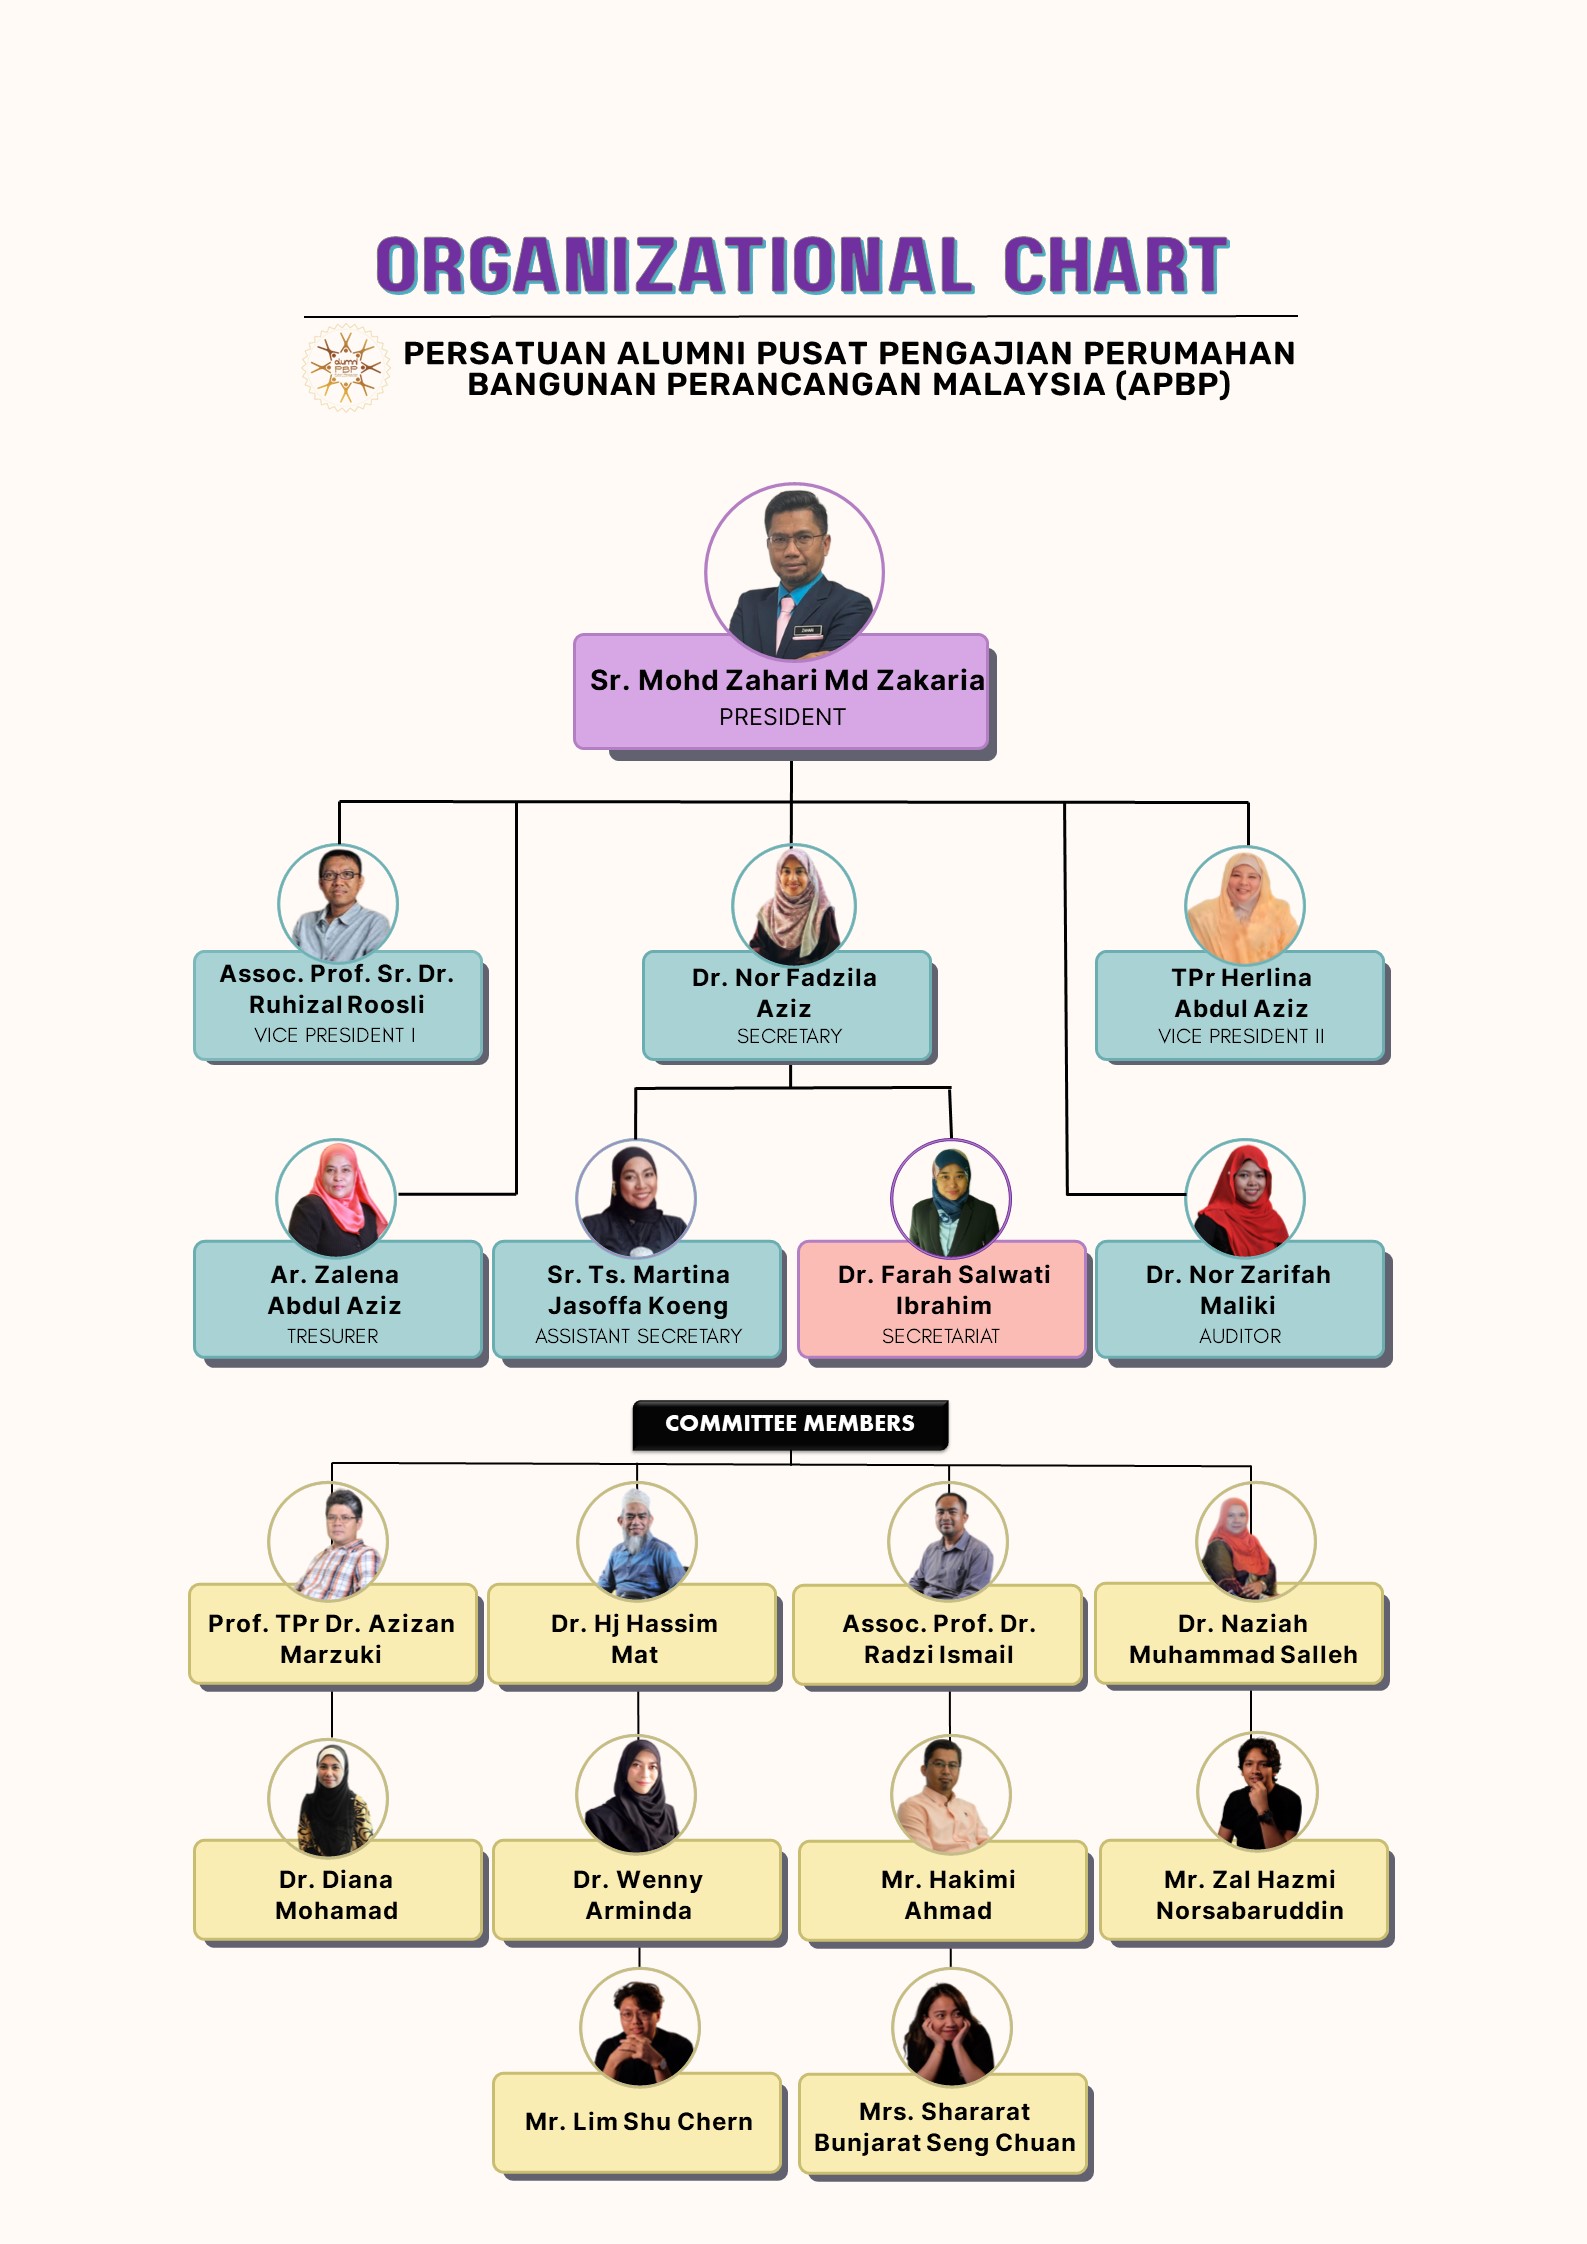 APBP Organizational Chart photo